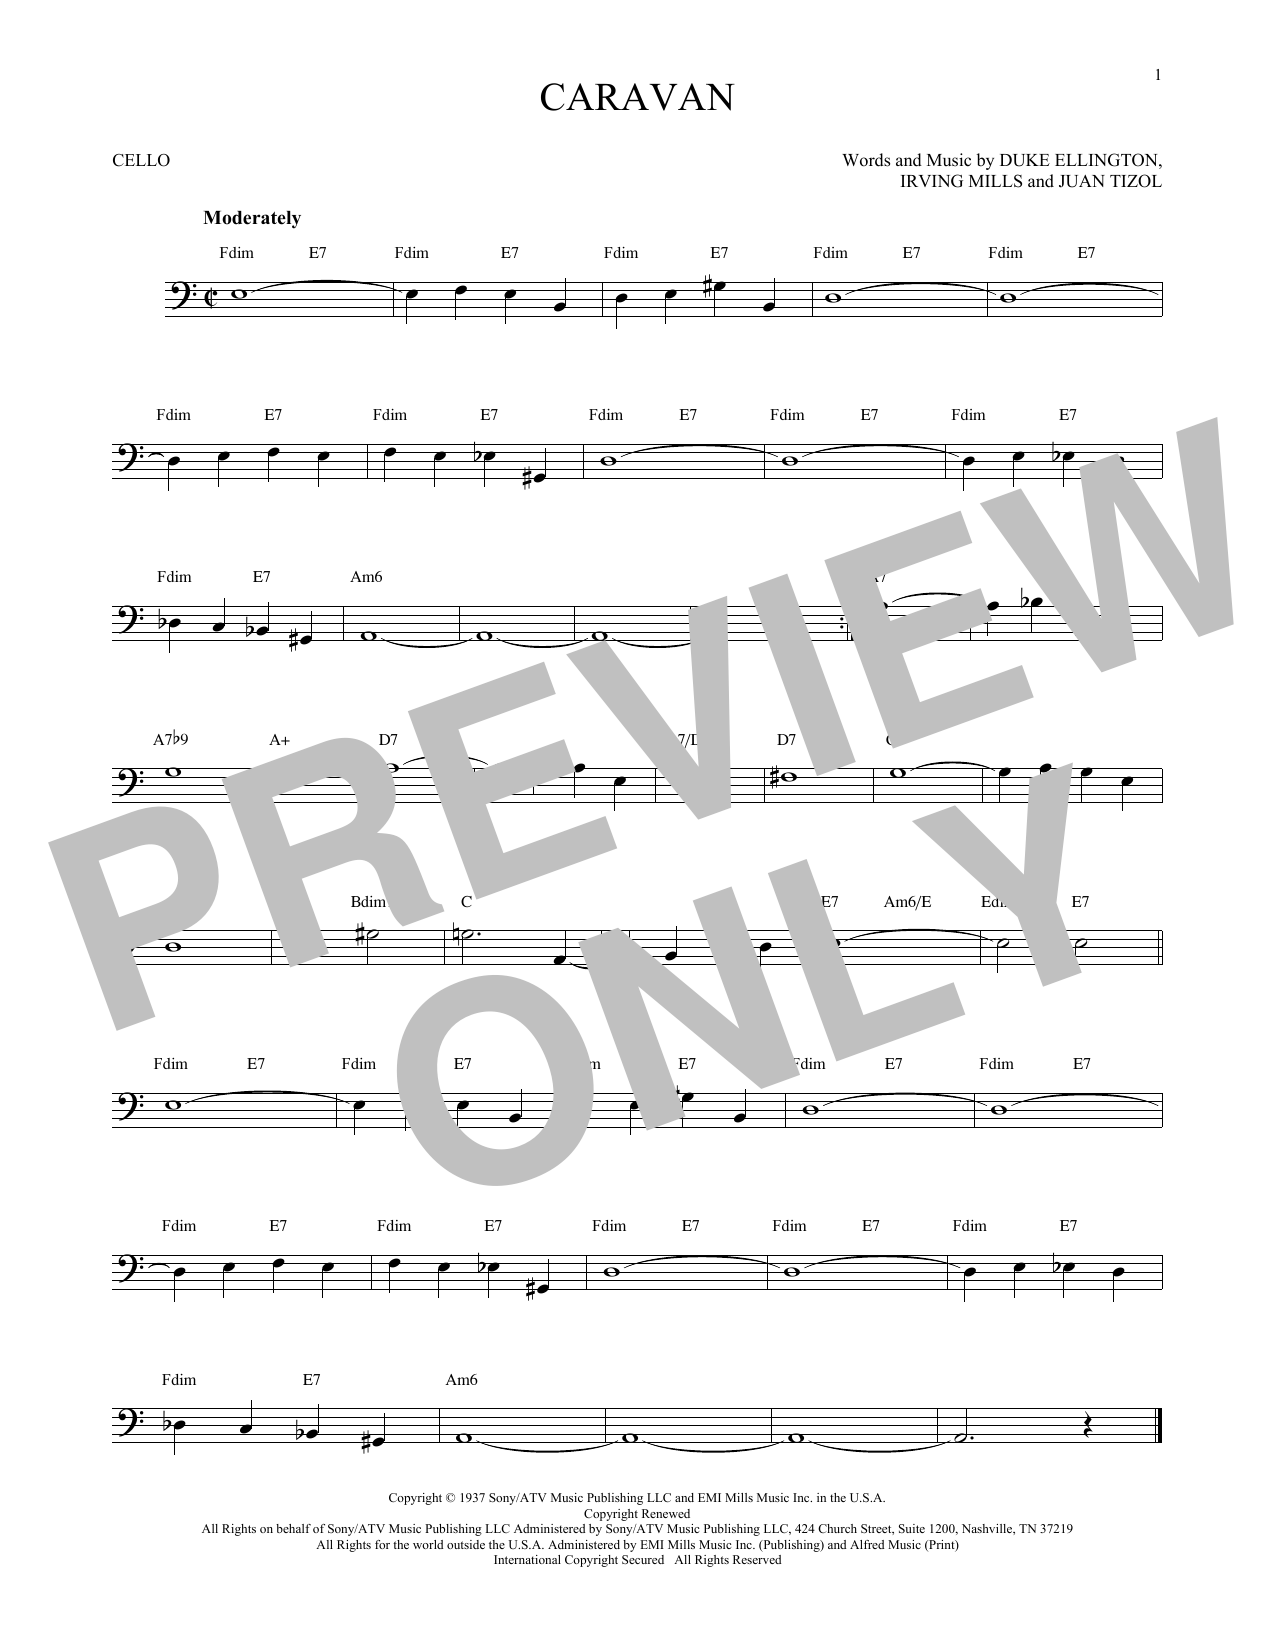 Juan Tizol & Duke Ellington Caravan Sheet Music Notes & Chords for Trumpet - Download or Print PDF